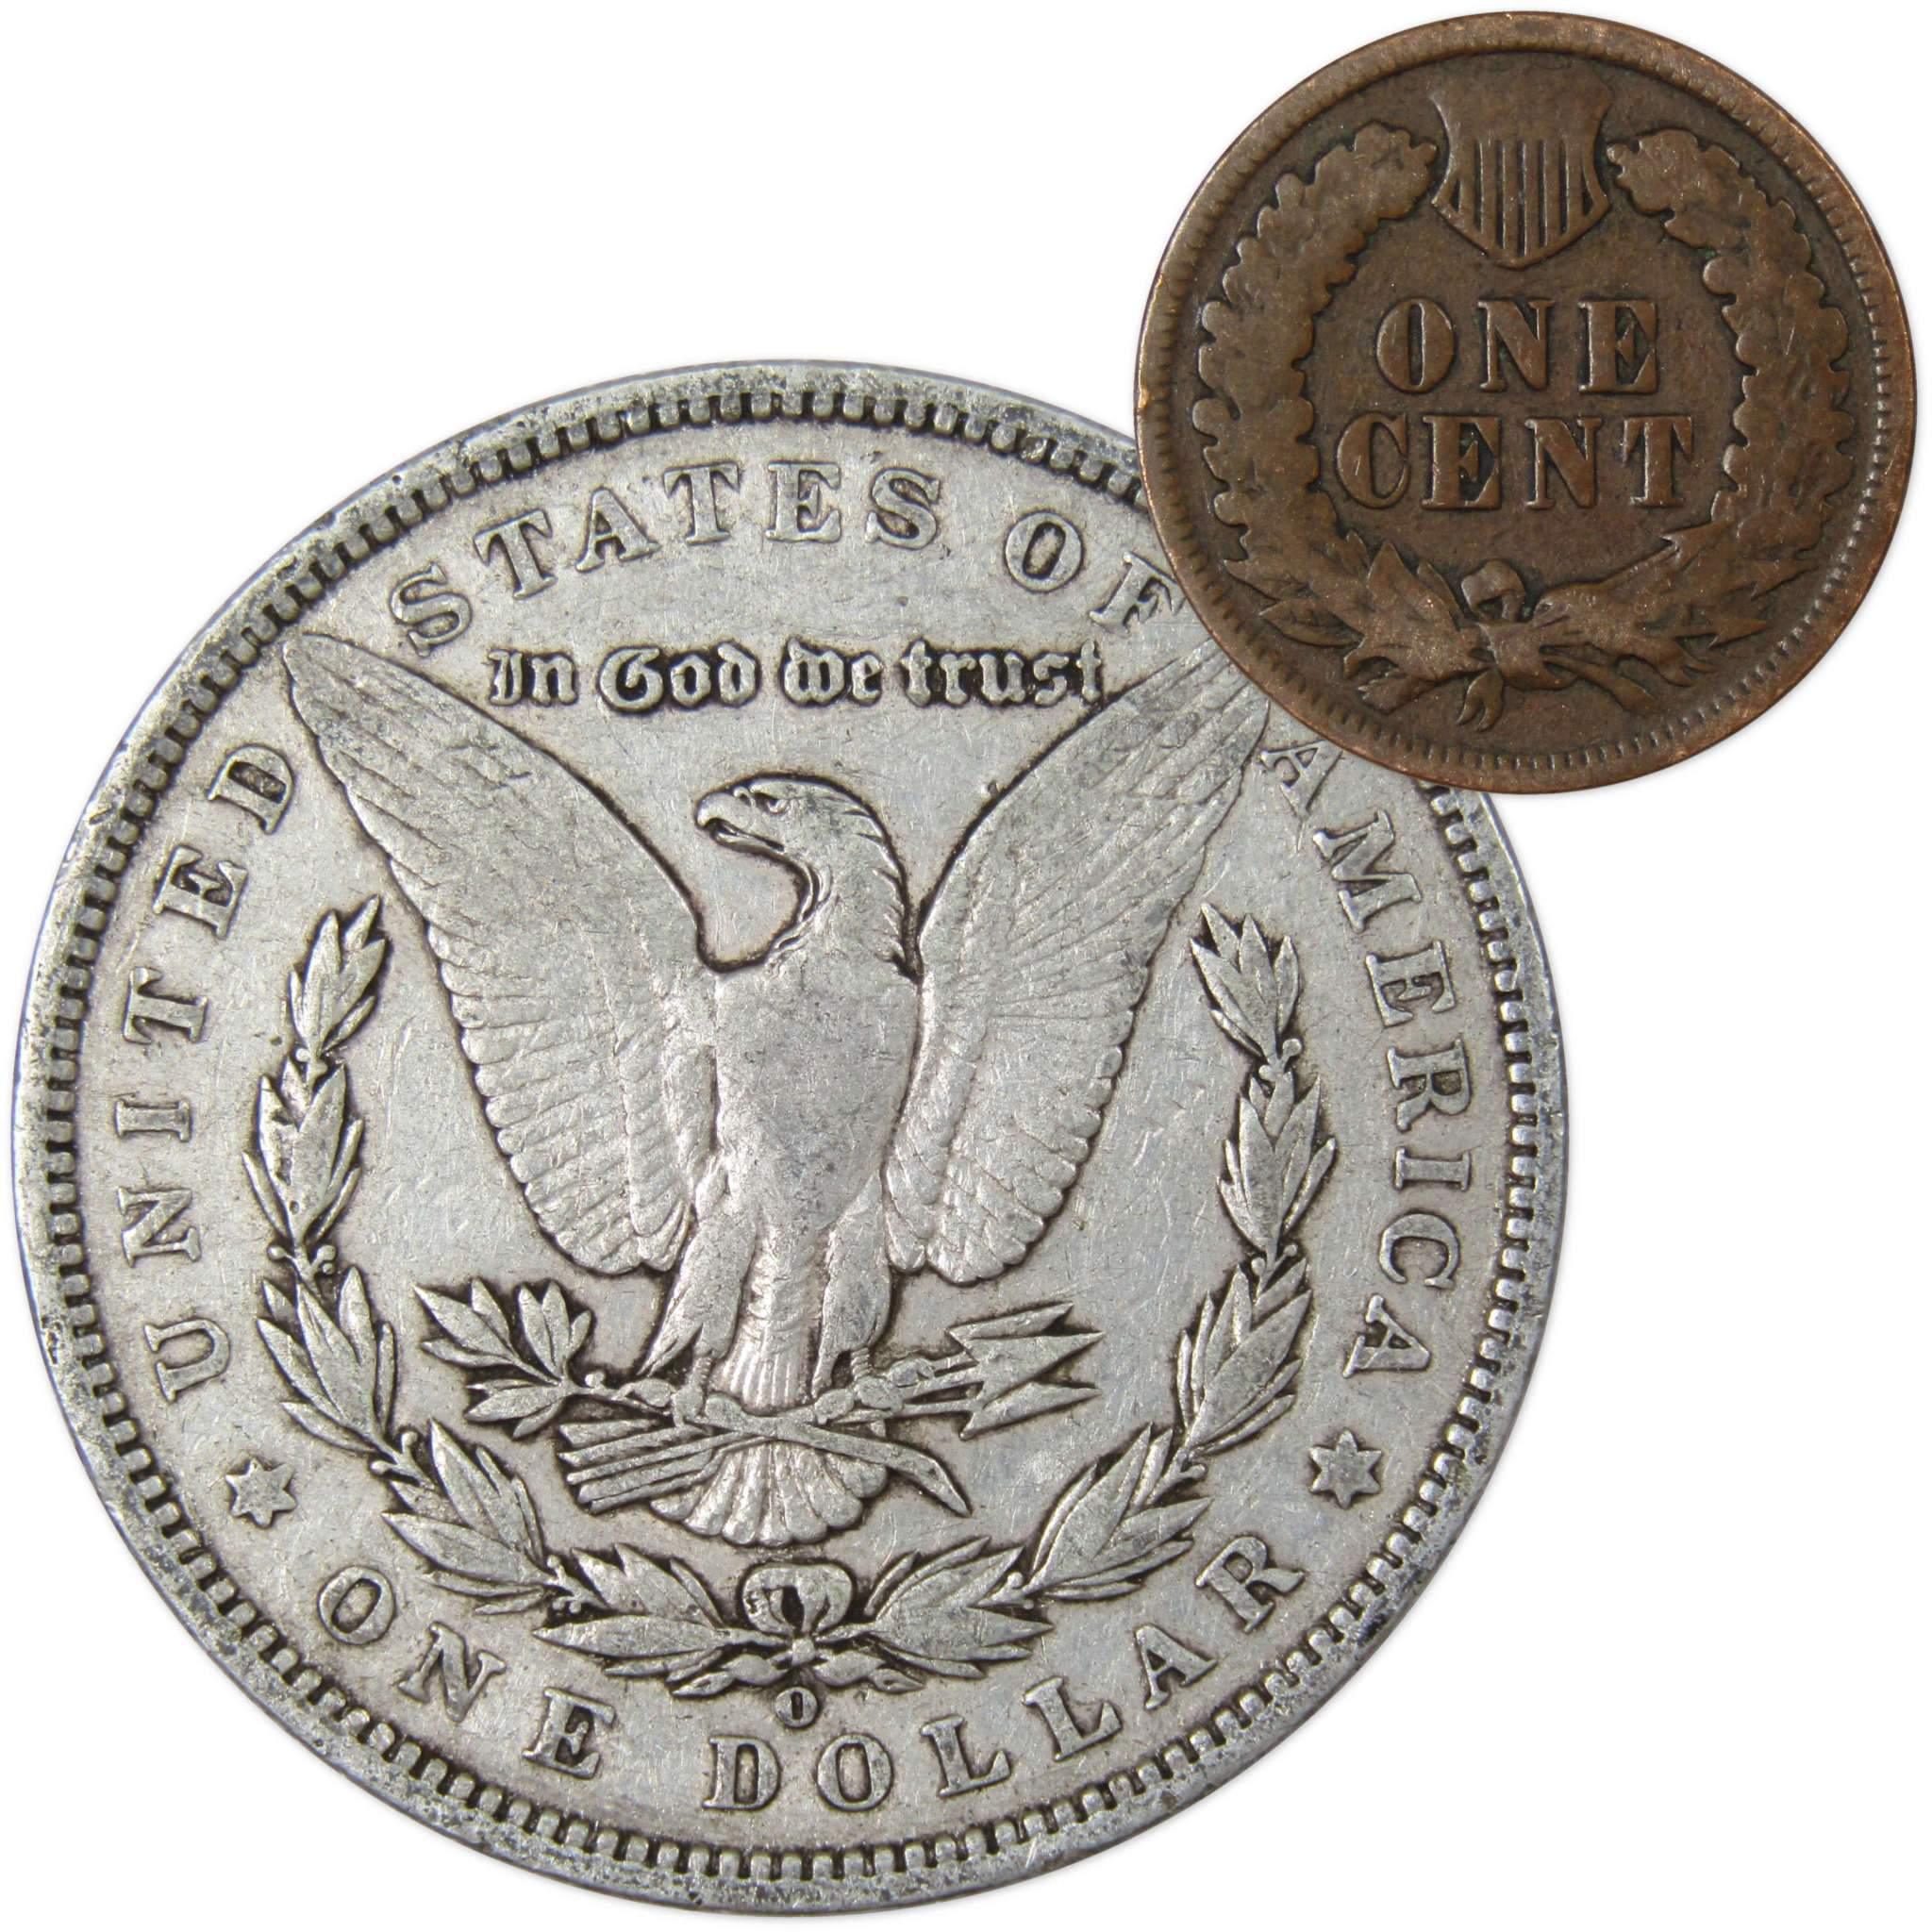 1899 O Morgan Dollar F Fine 90% Silver Coin with 1900 Indian Head Cent G Good - Morgan coin - Morgan silver dollar - Morgan silver dollar for sale - Profile Coins &amp; Collectibles